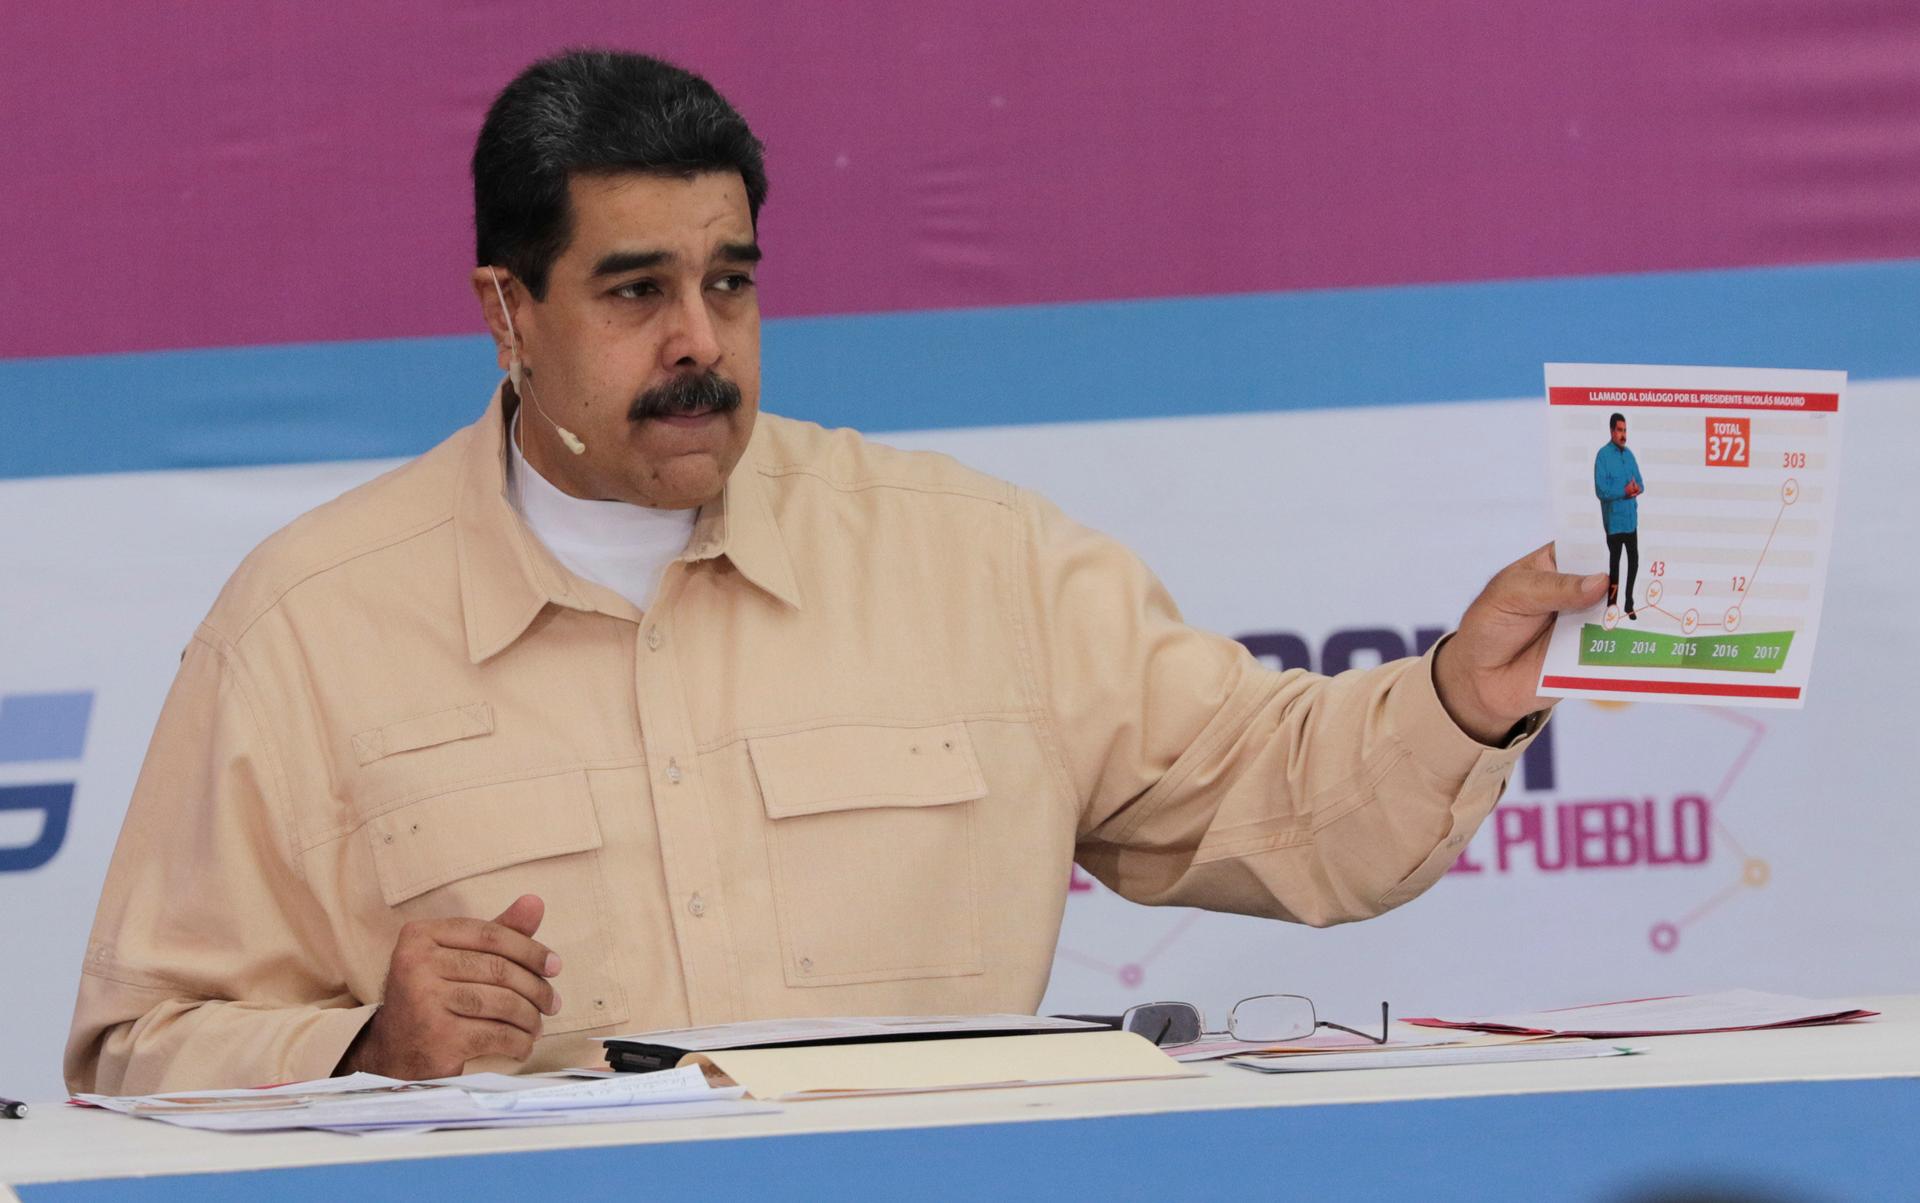 Venezuelan President Nicolas Maduro announced the creation of the new cryptocurrency, Petro.